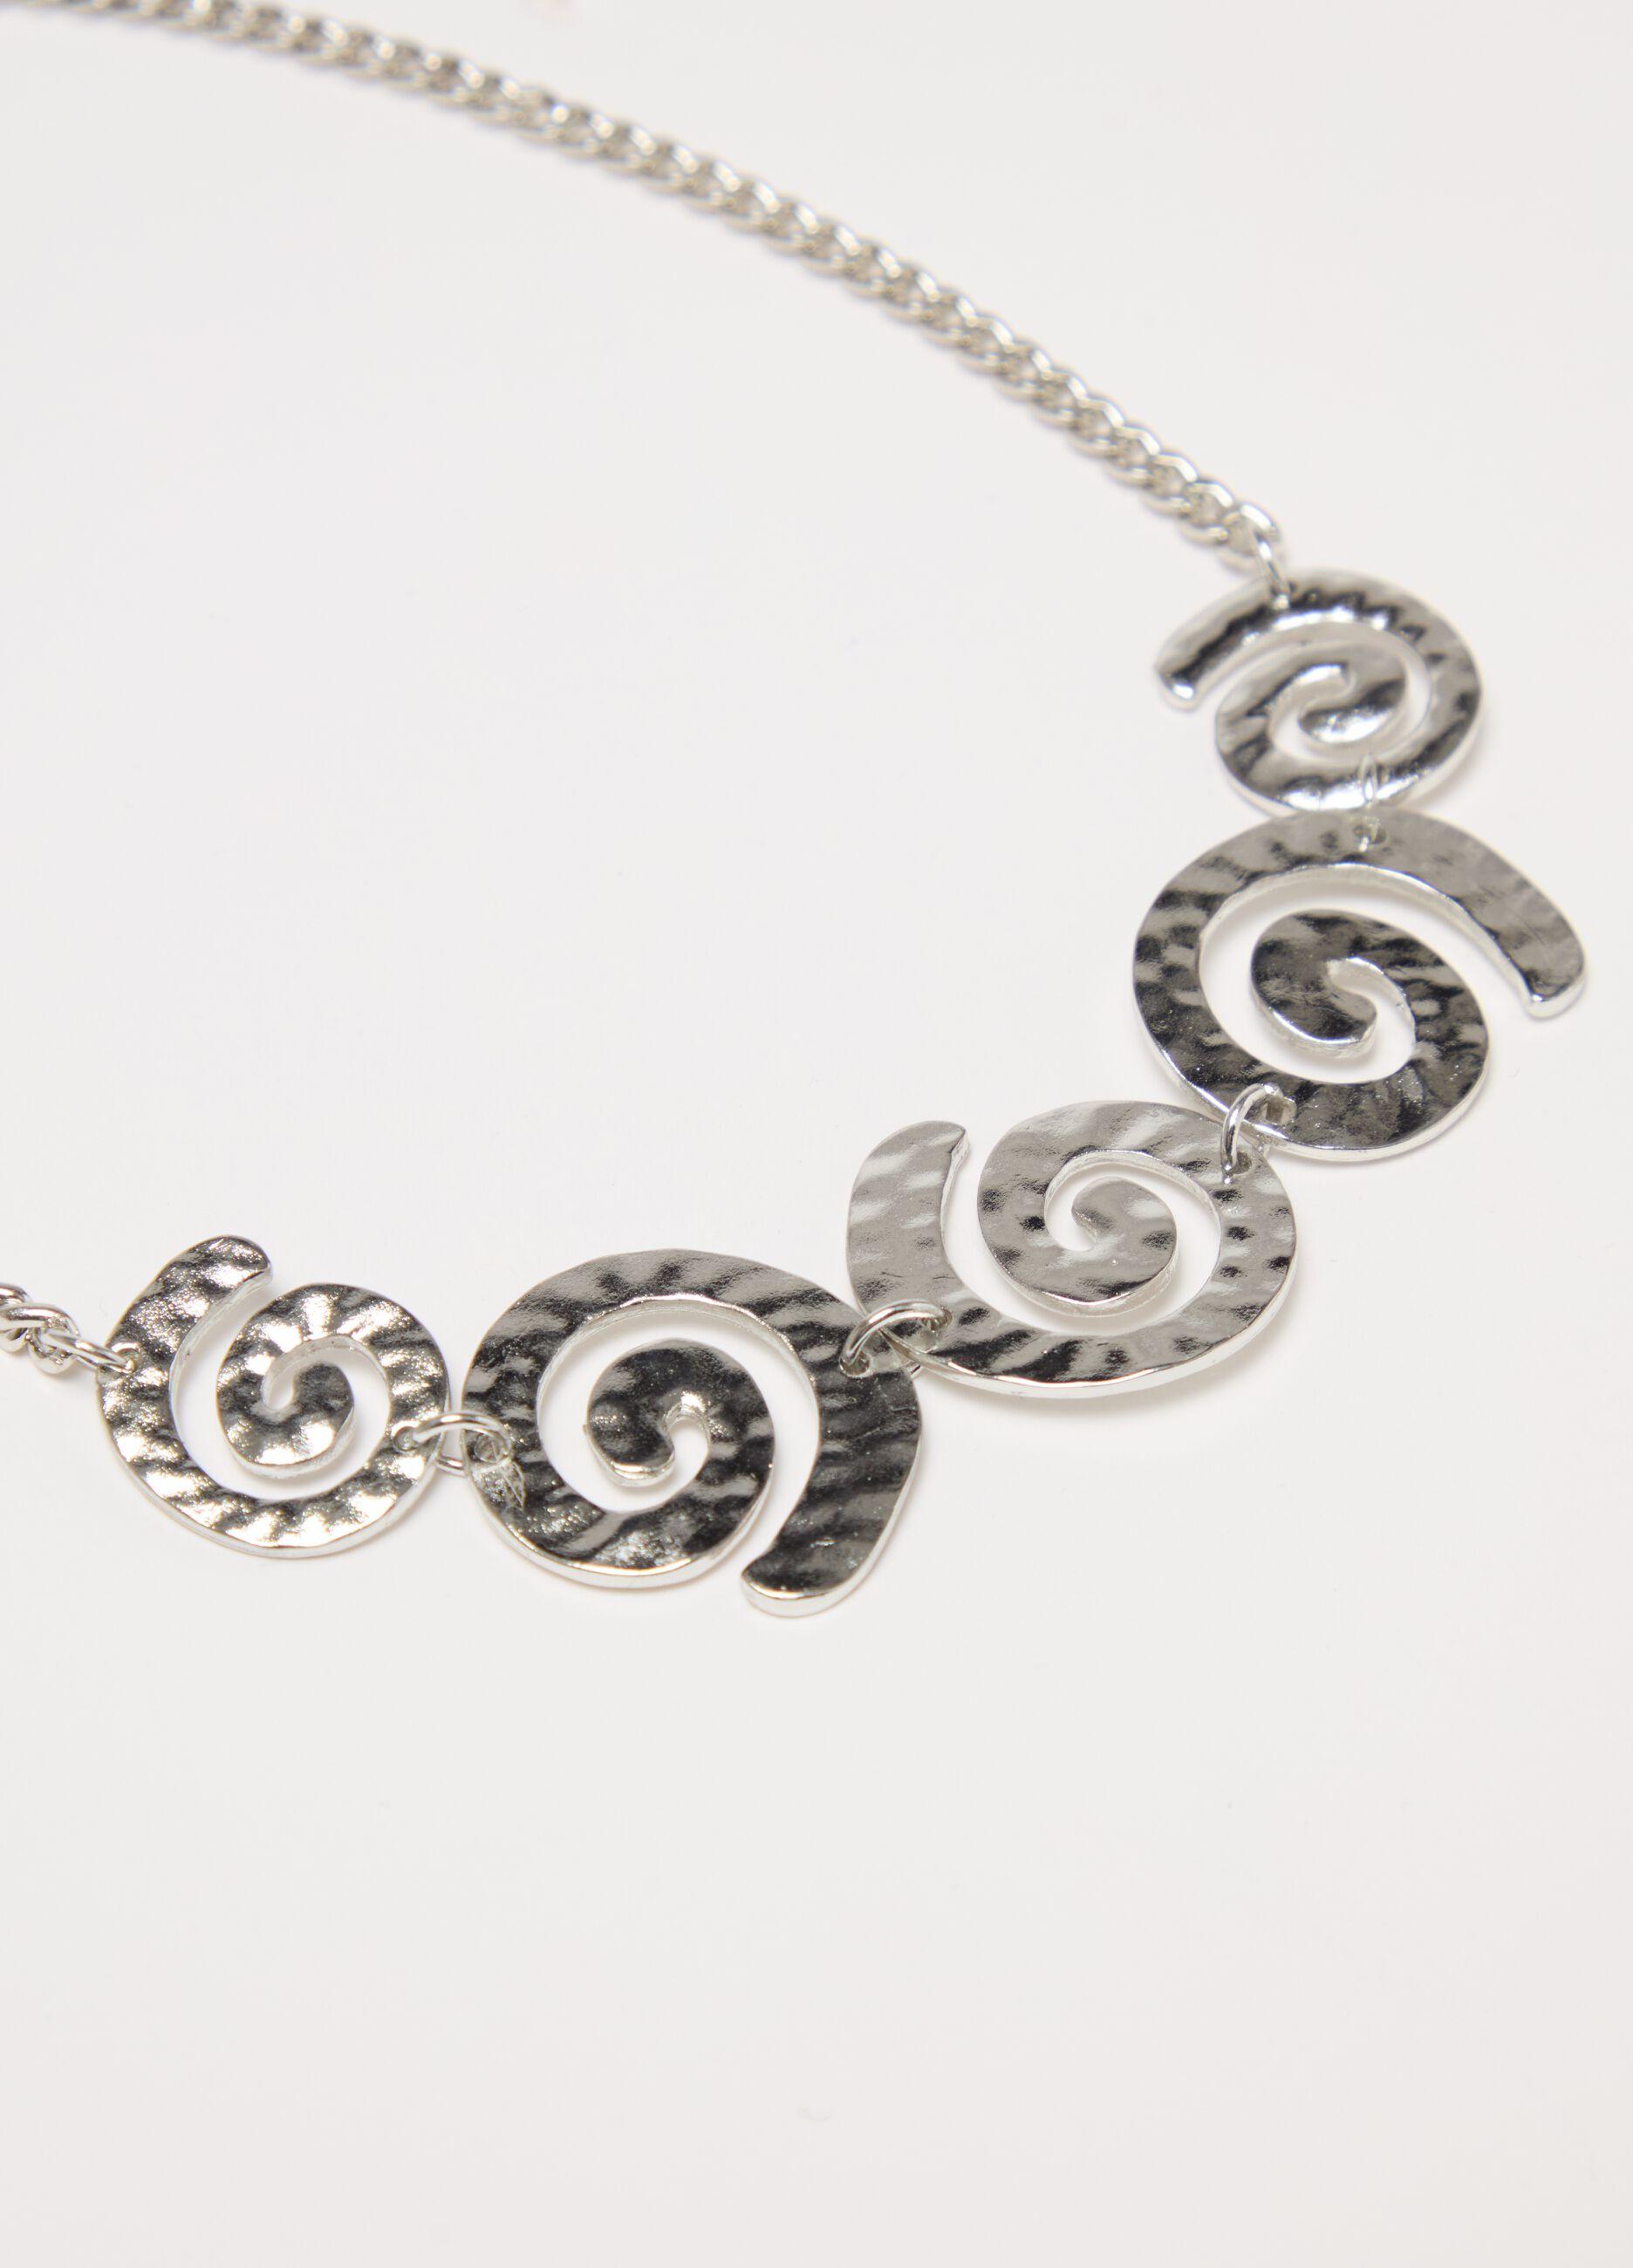 Chain necklace with spirals